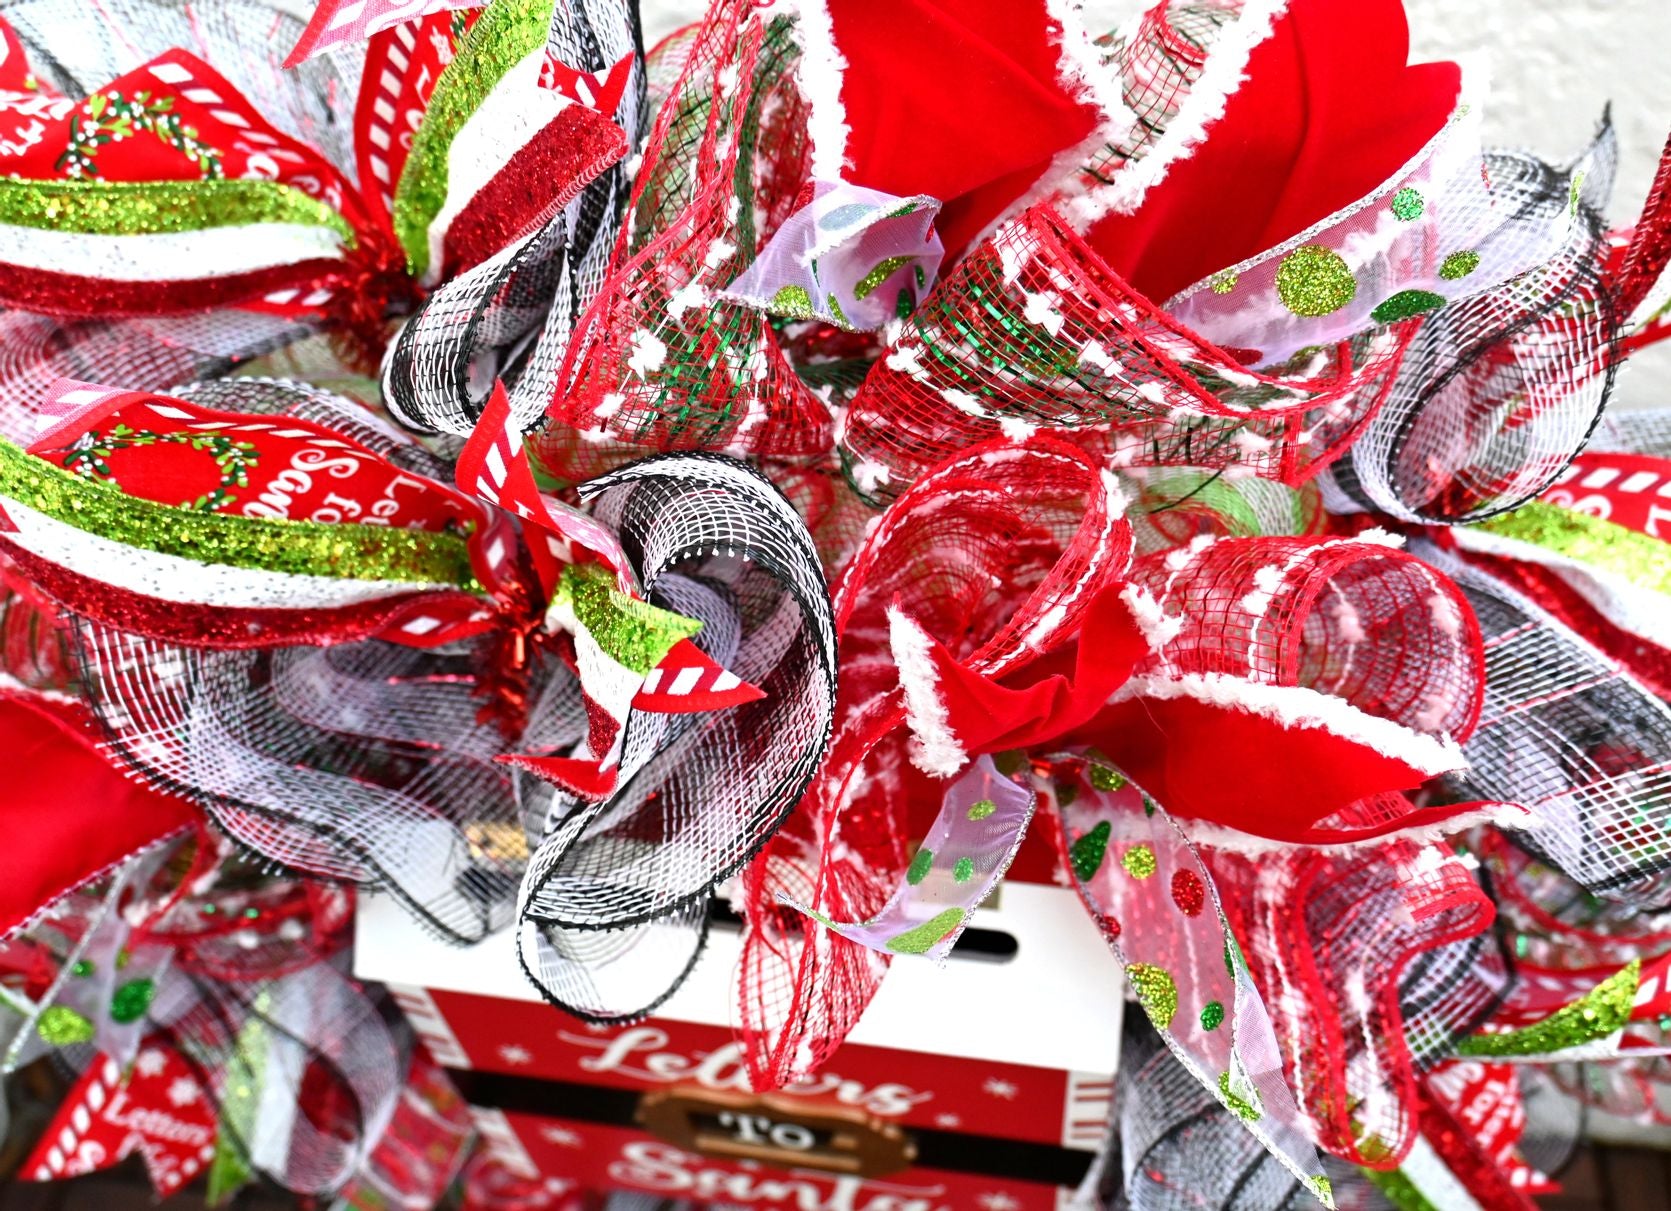 24" Letters To Santa Wreath - Magical Christmas Mailbox Wreath